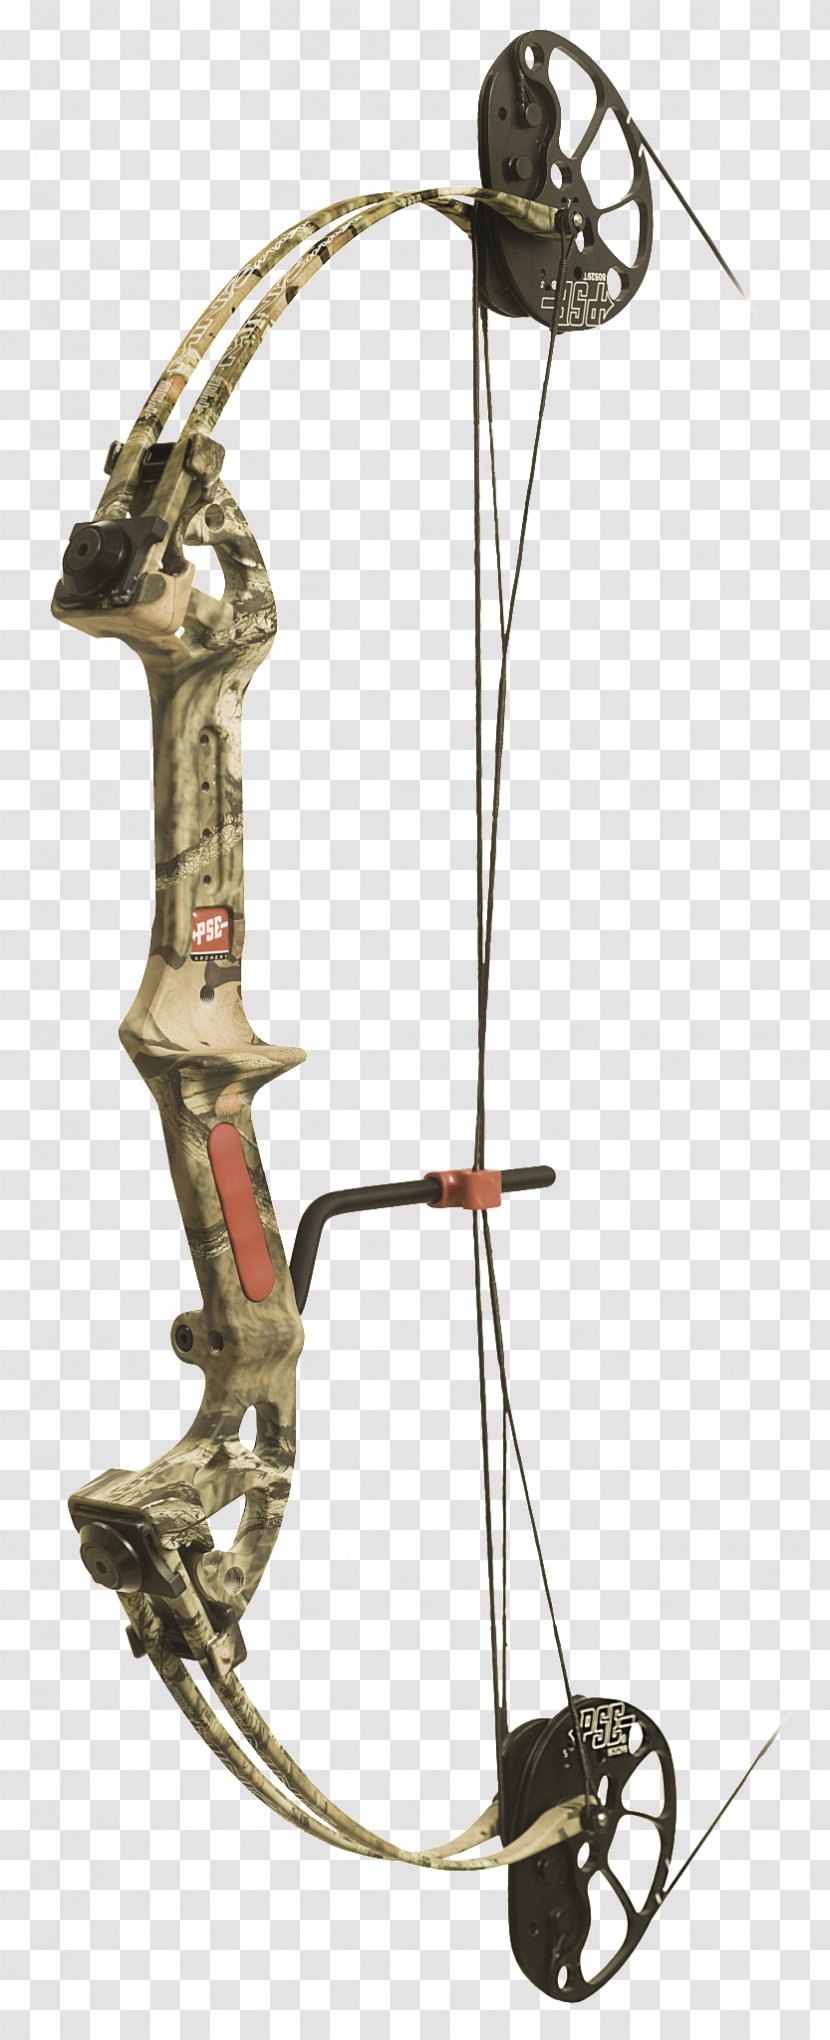 PSE Archery MINI Bow And Arrow Compound Bows - Pse - Competition Equipment Transparent PNG